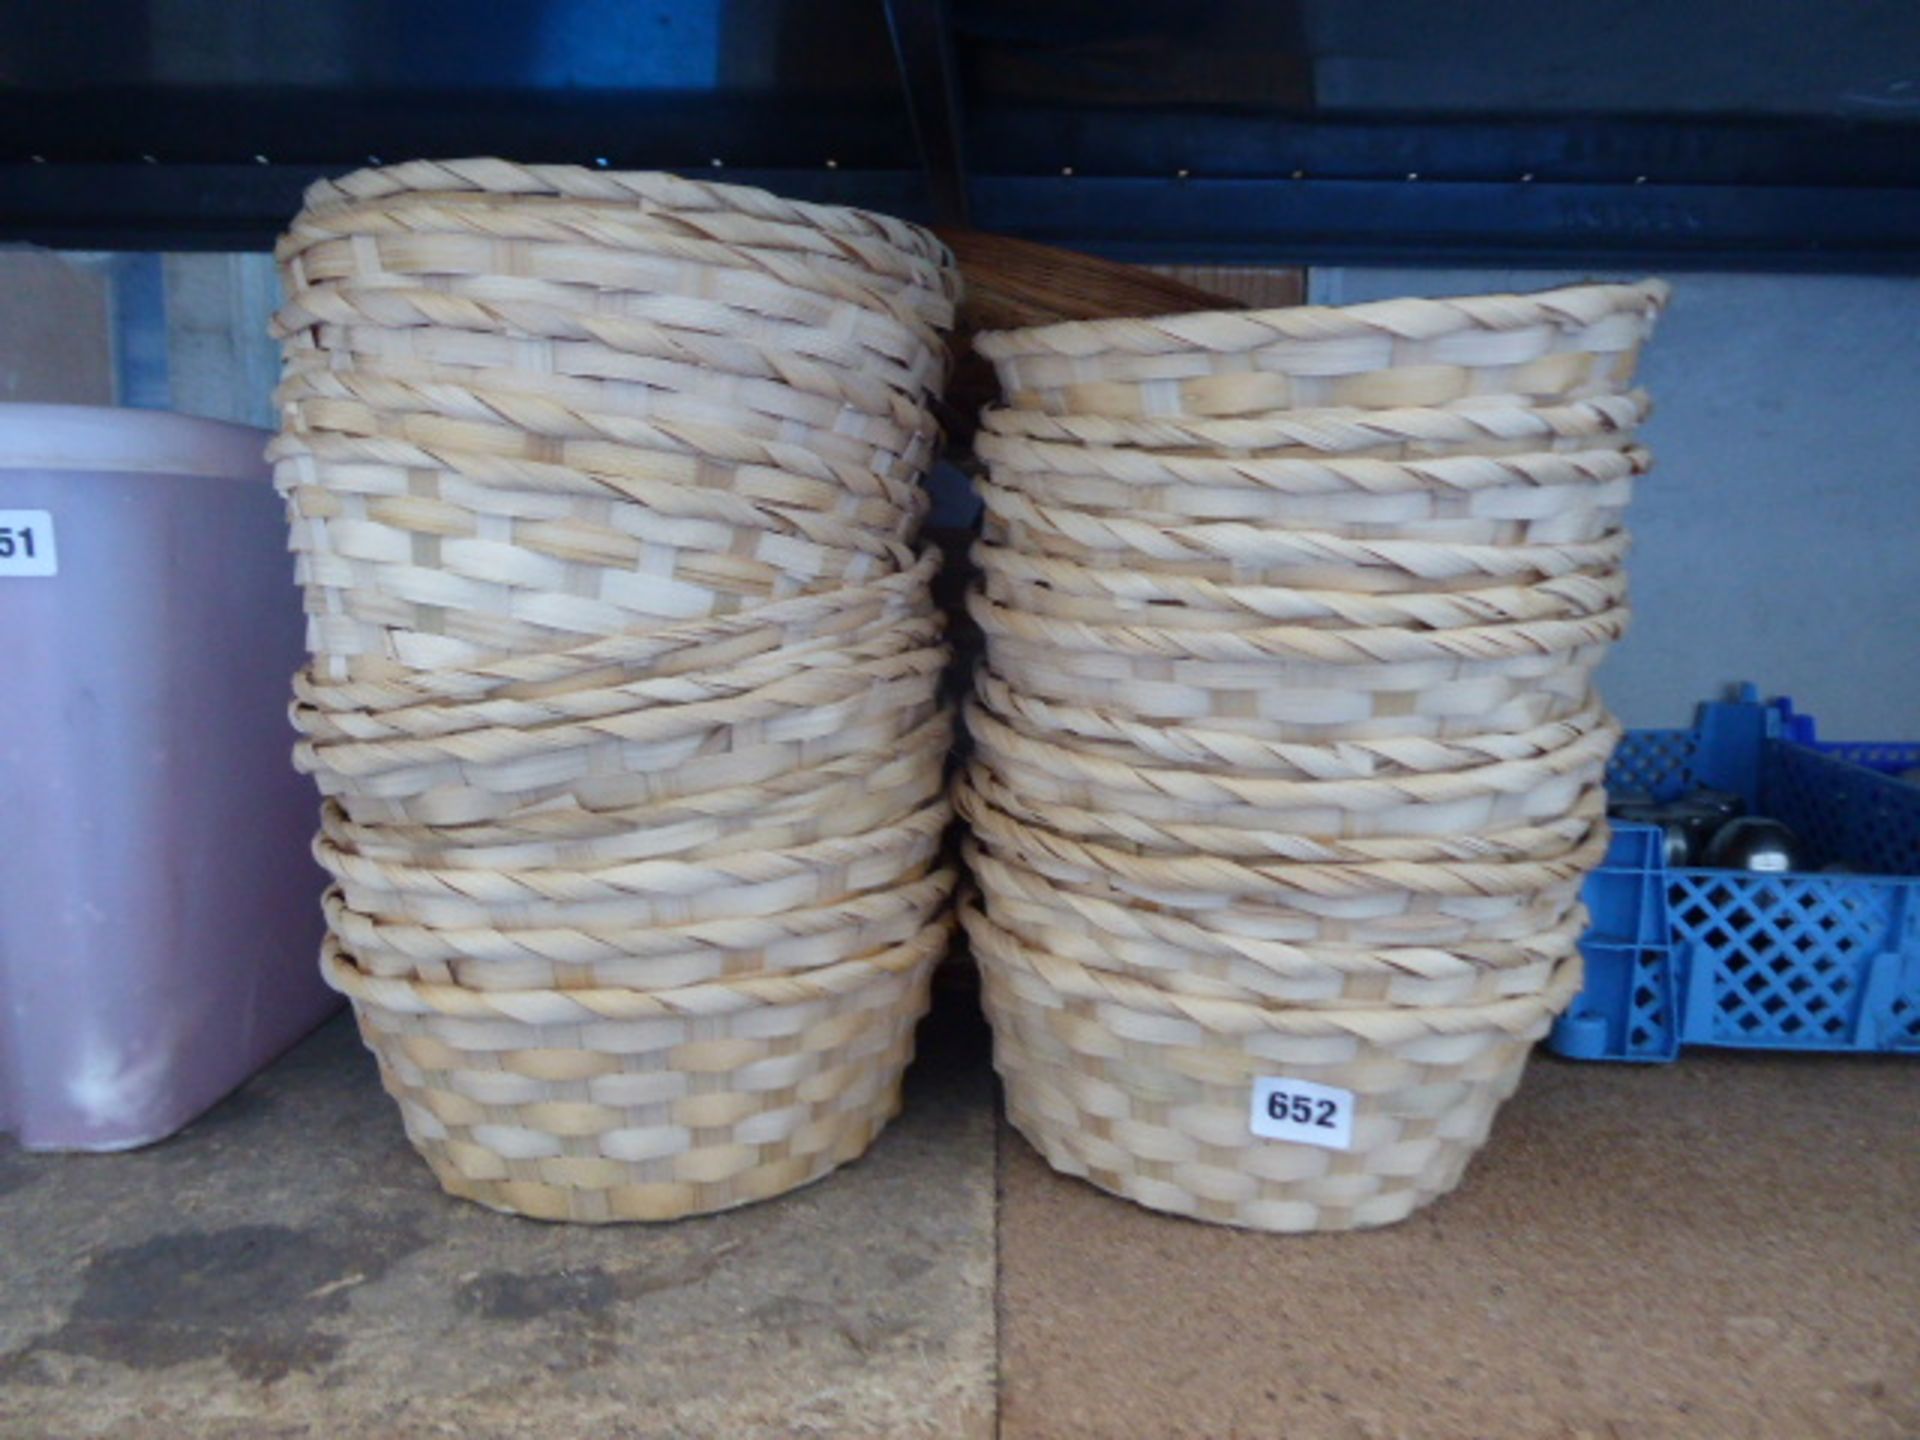 3 stacks of bread baskets